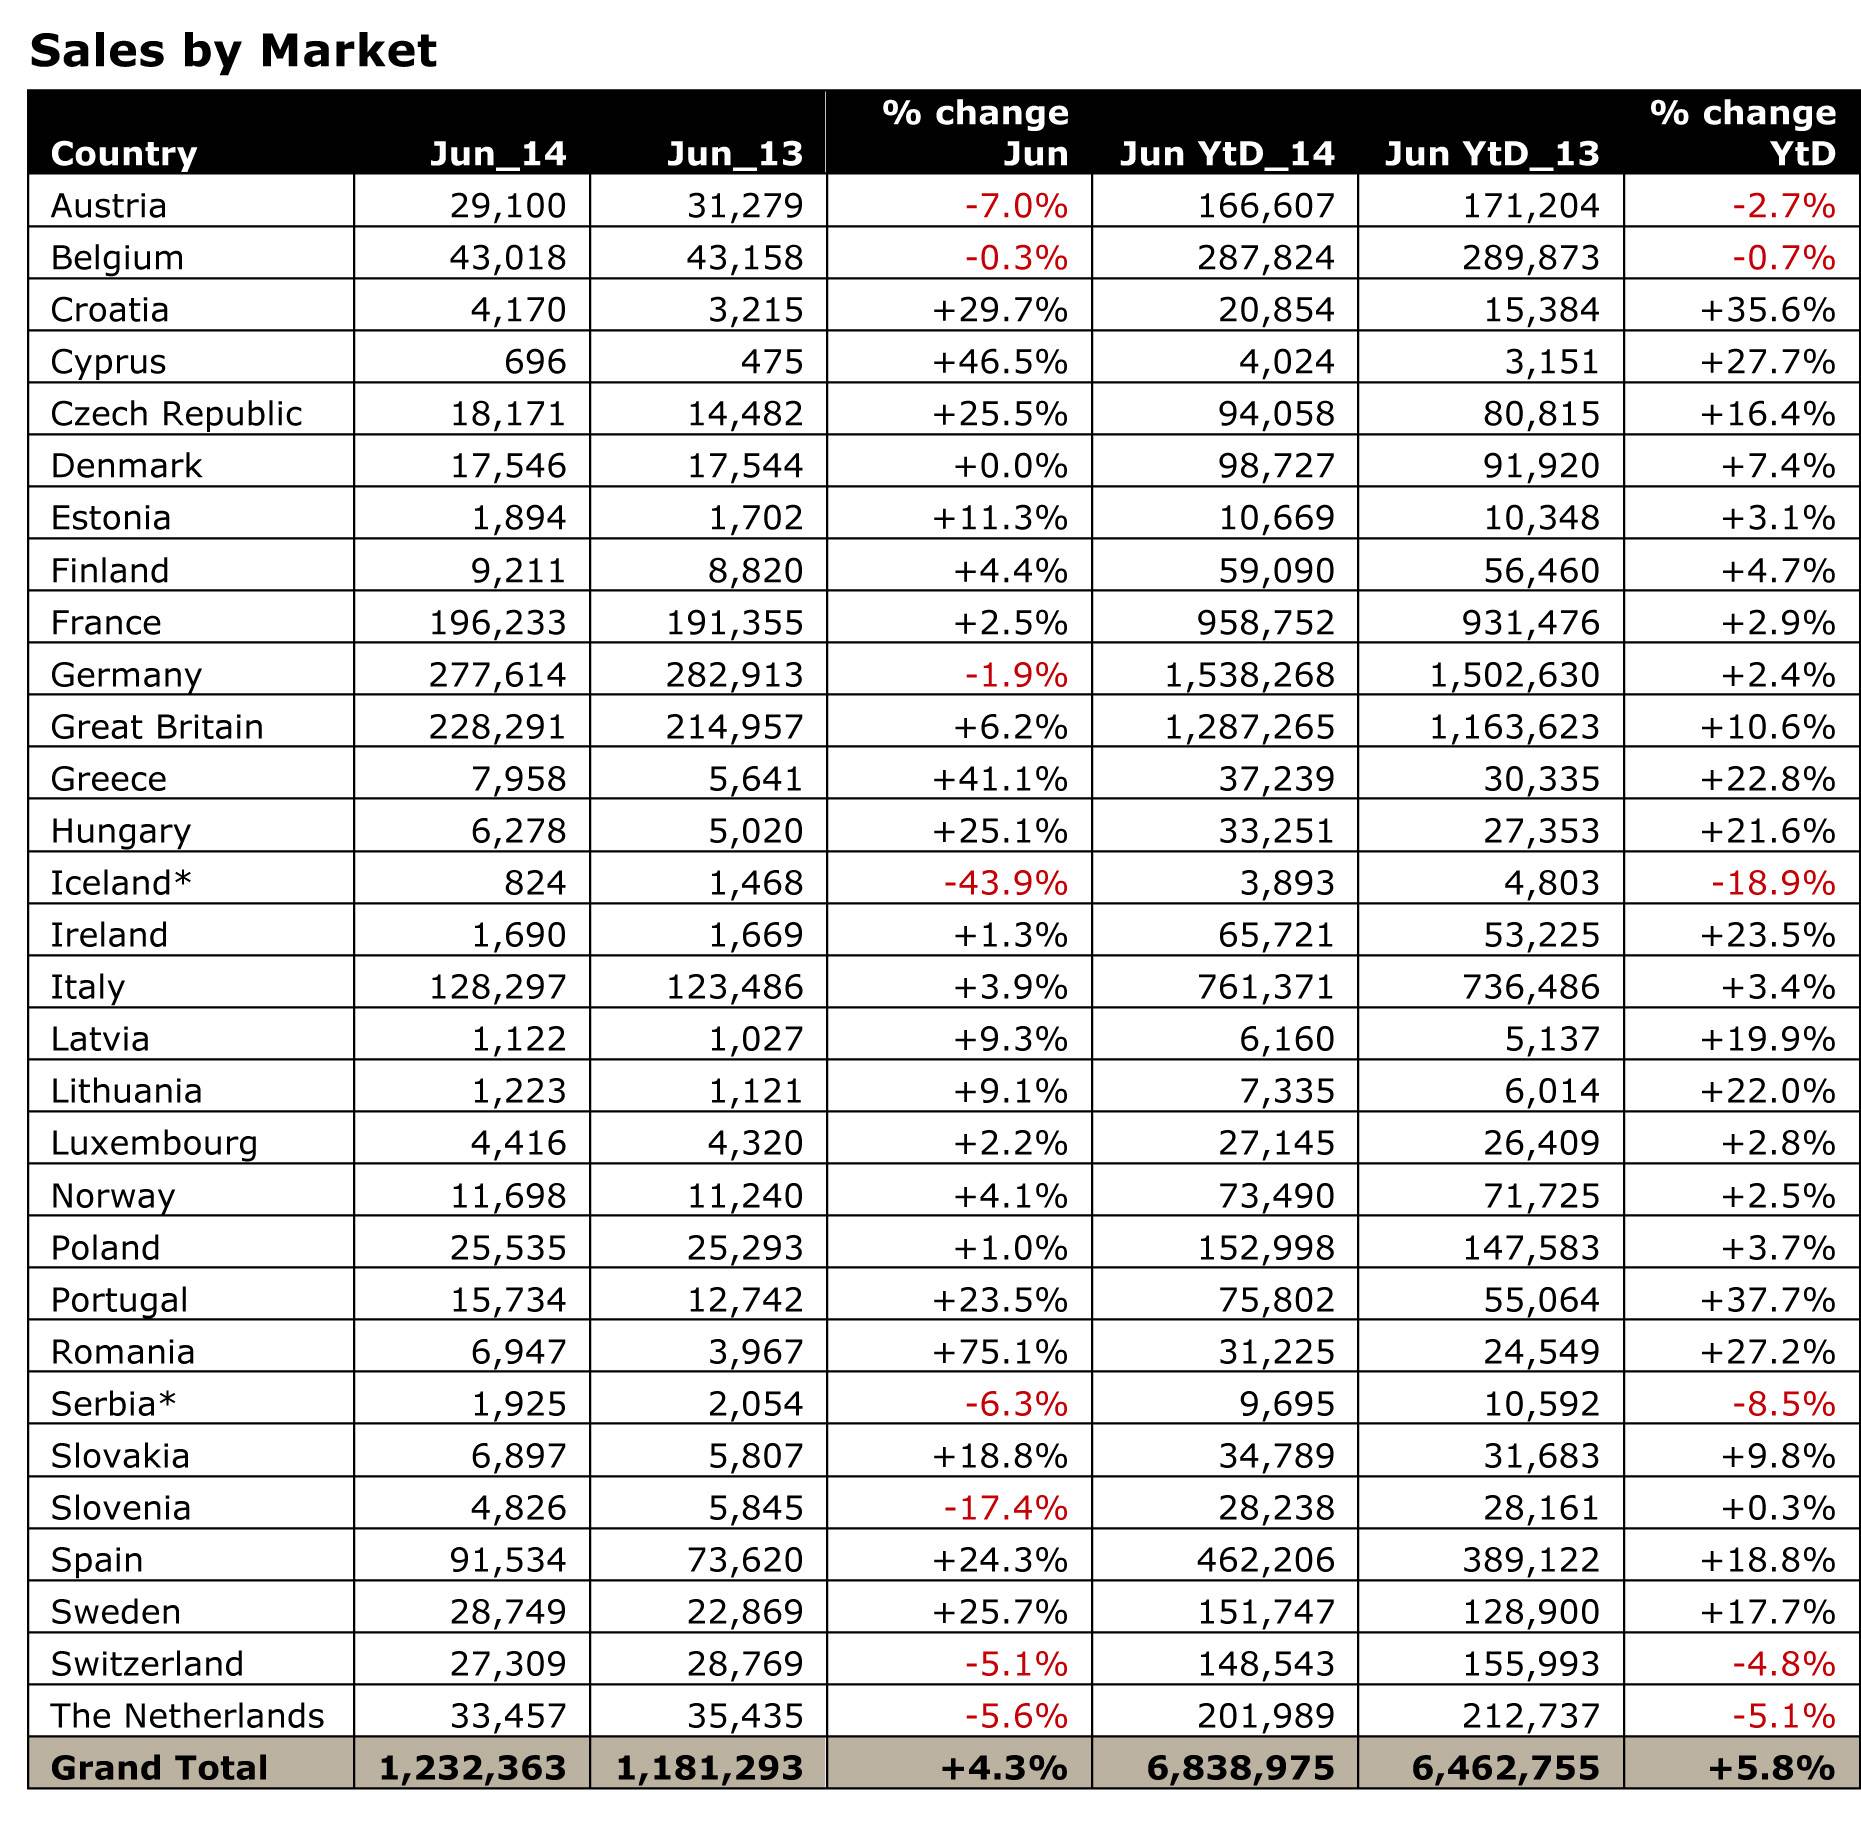 jato-june-2014-c-sales-by-market